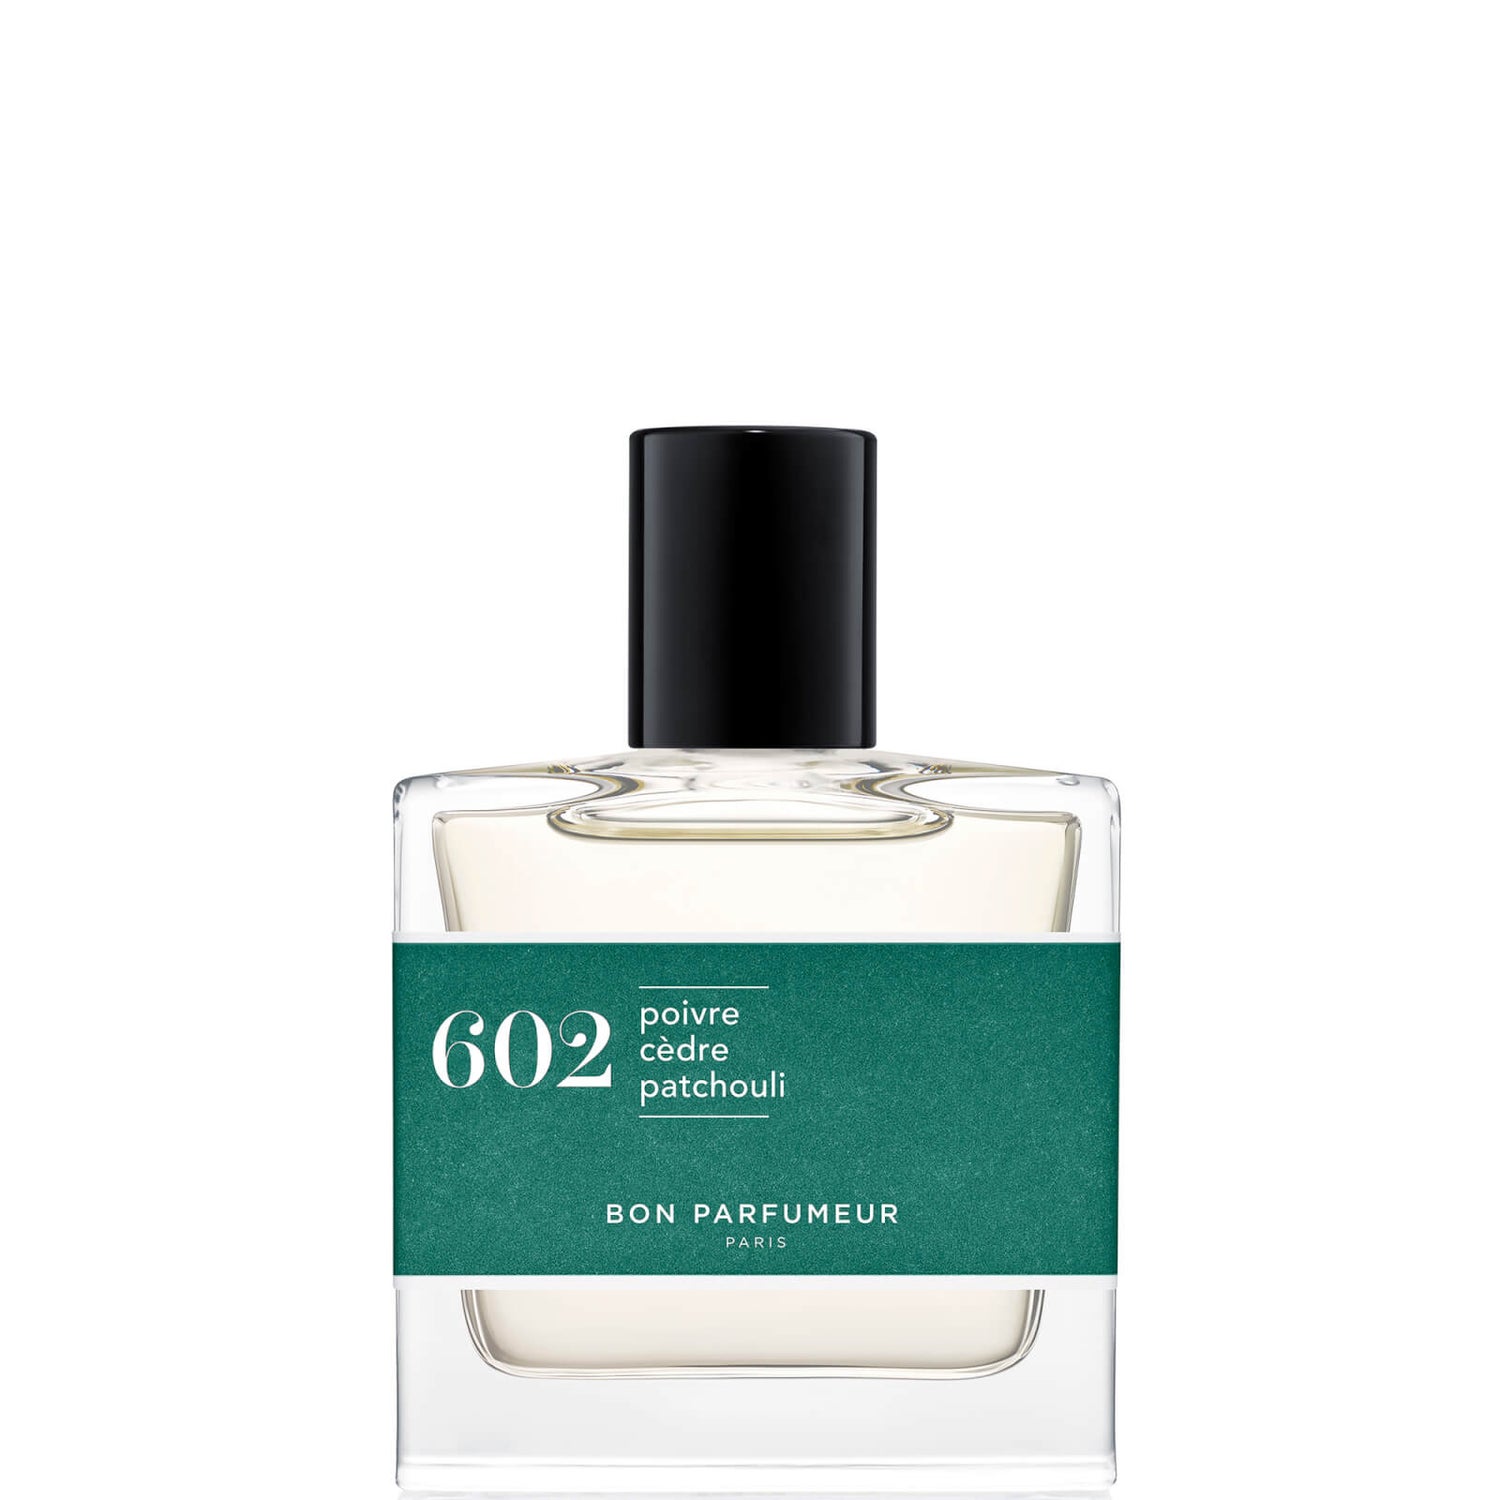 Bon Parfumeur 602 Agua de perfume de pimienta, cedro y pachulí - 30ml